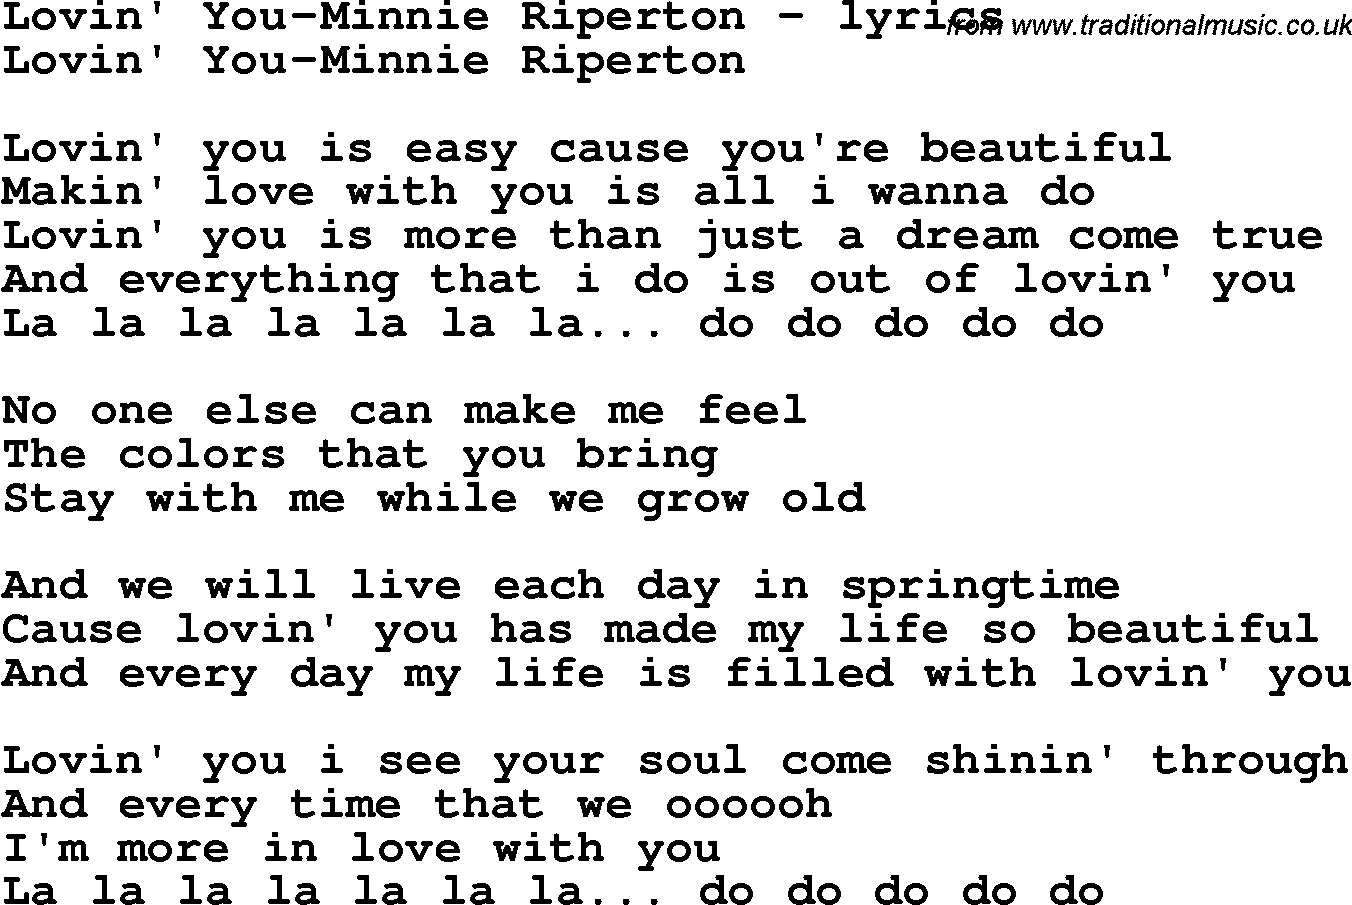 Love Song Lyrics for: Lovin' You-Minnie Riperton